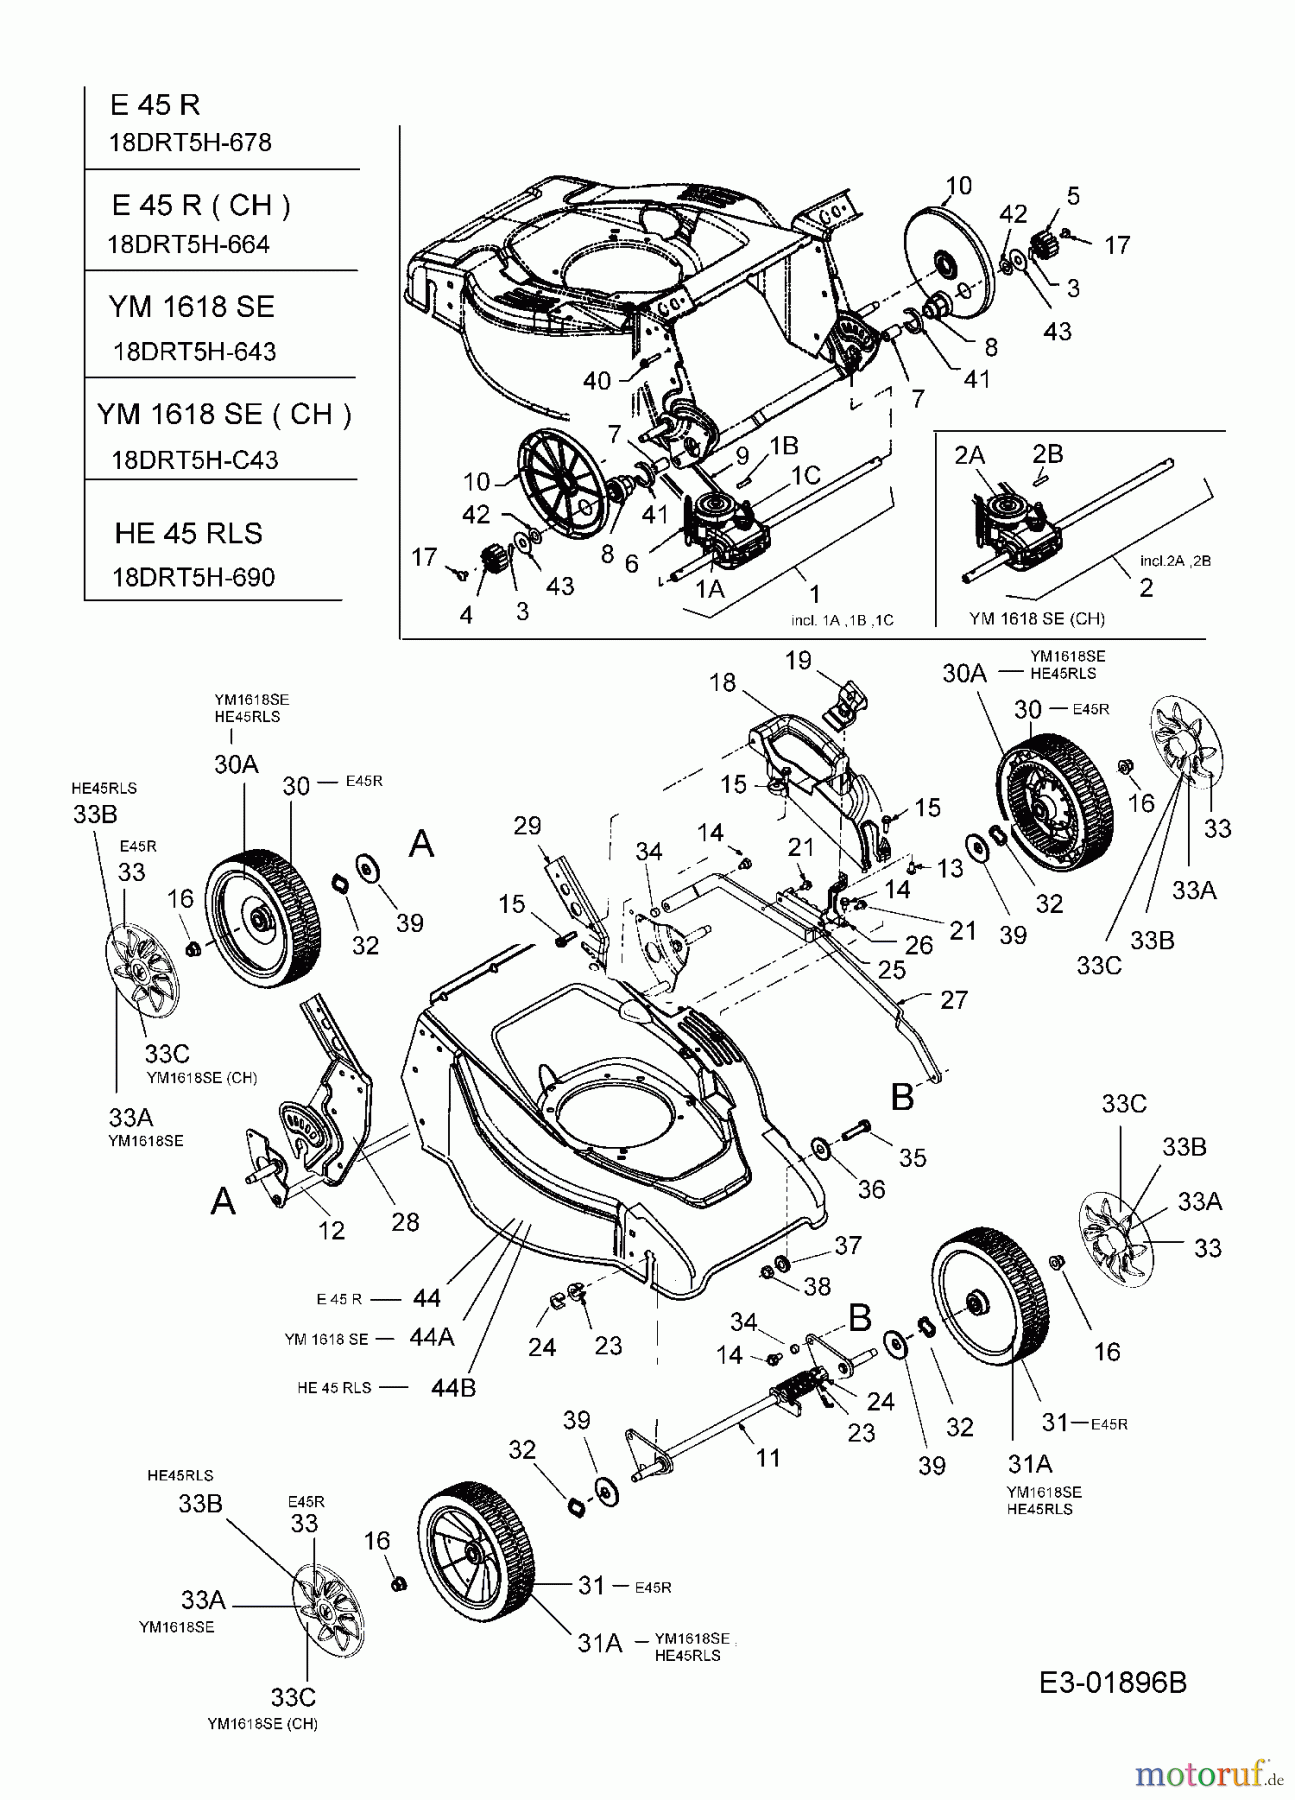  MTD Electric mower self propelled E 45 R 18DRT5H-664  (2005) Gearbox, Wheels, Cutting hight adjustment